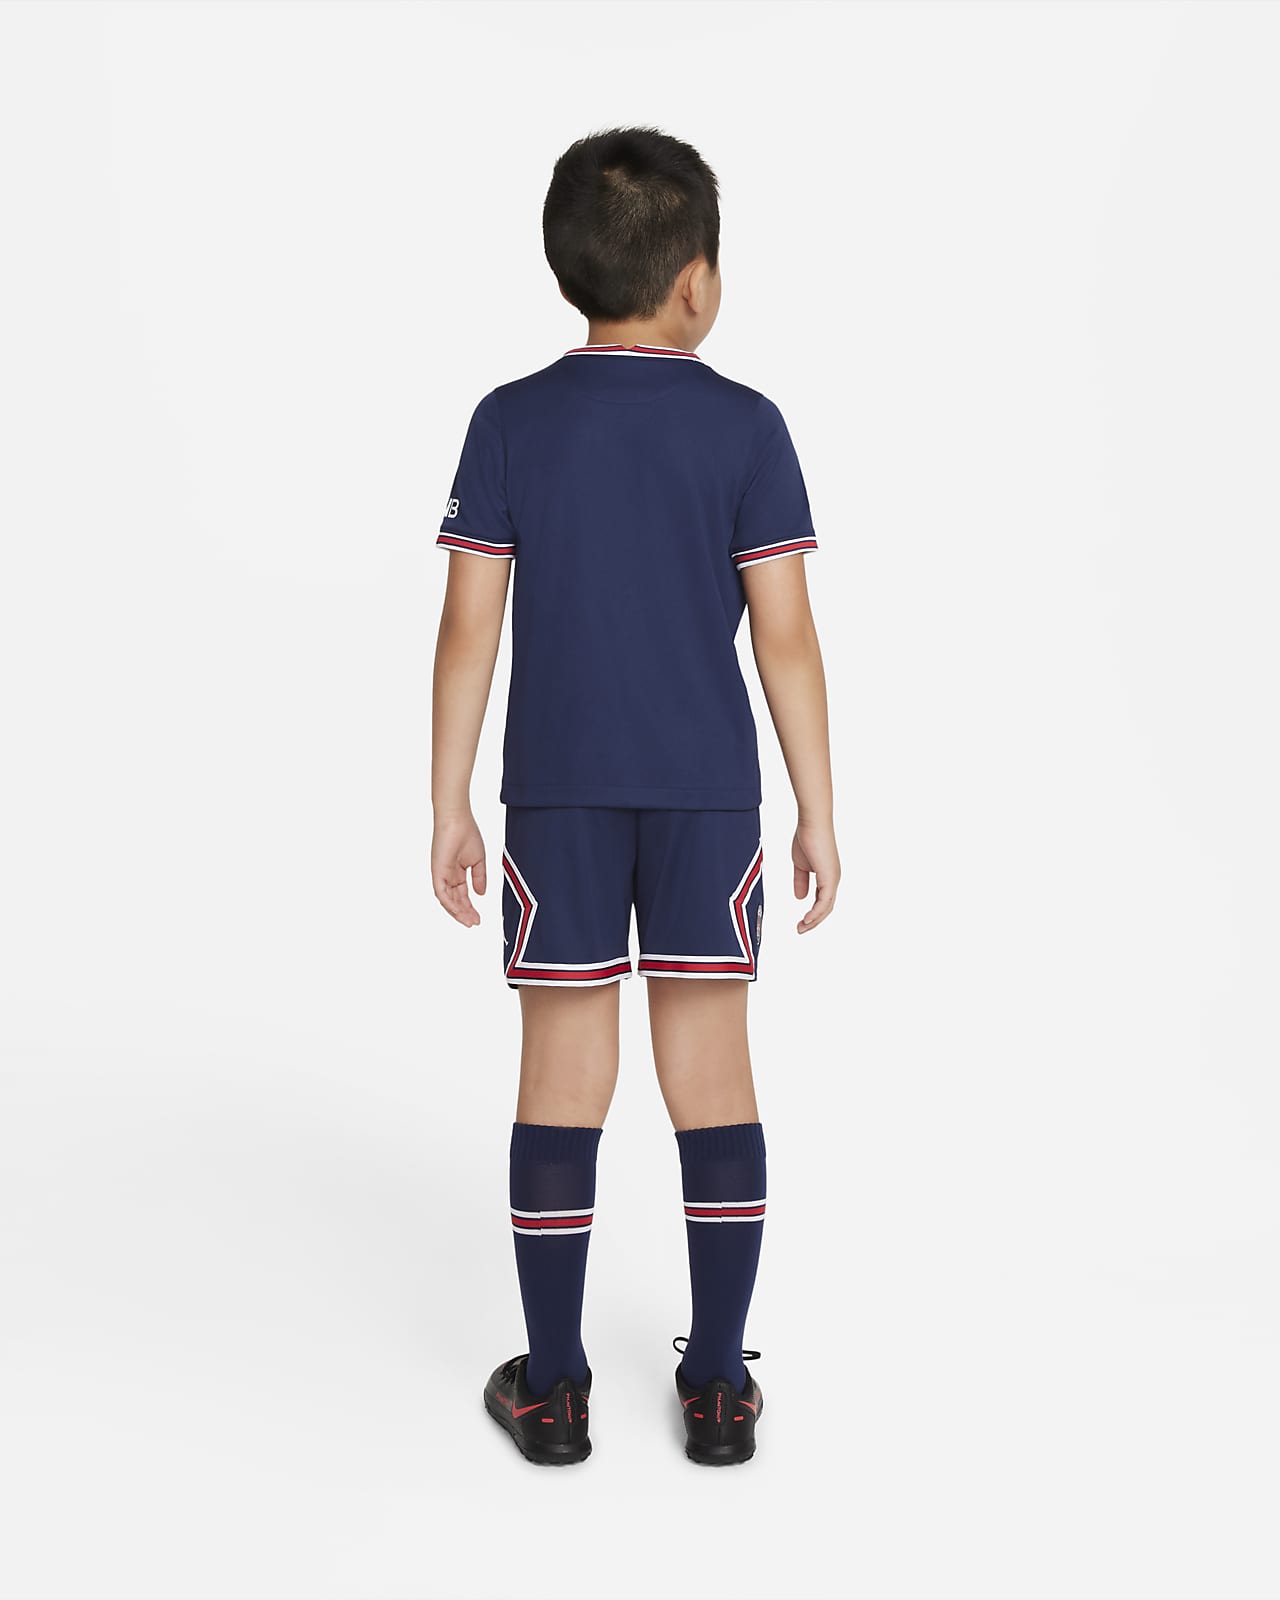 Kinder Jungen Mädchen Fußball Kit Jersey Trikot Set Kit shirt & shorts für 3-14Y 